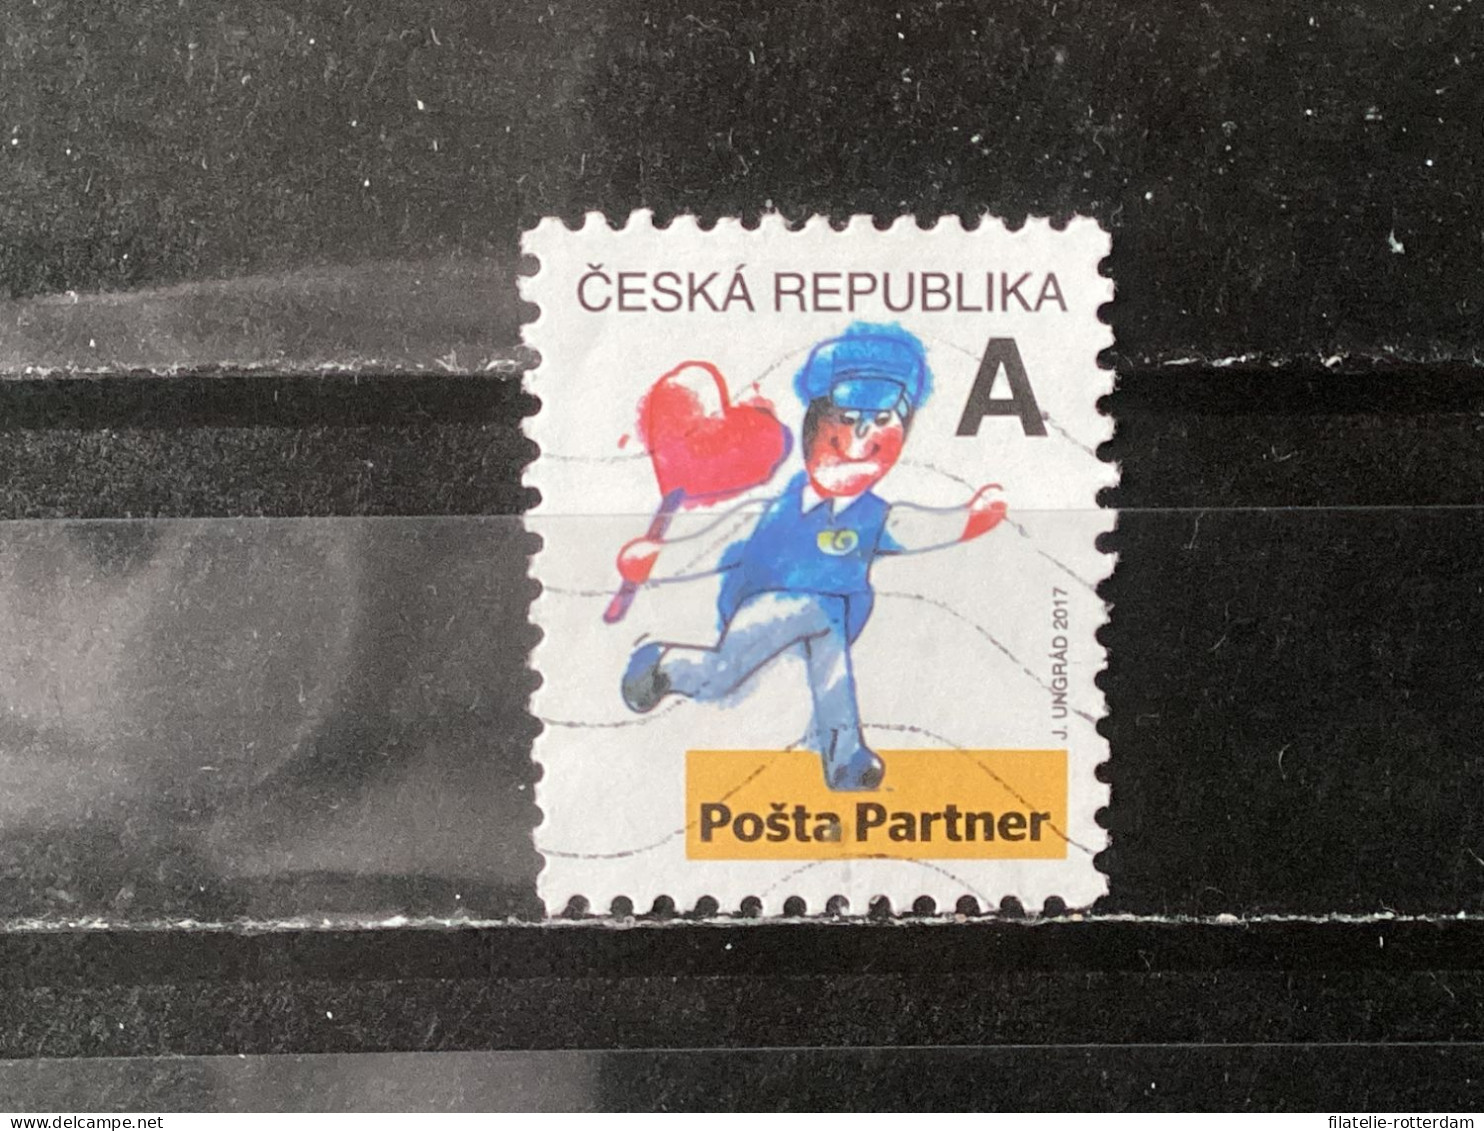 Czech Republic / Tsjechië - Partner Post Office (A) 2017 - Used Stamps